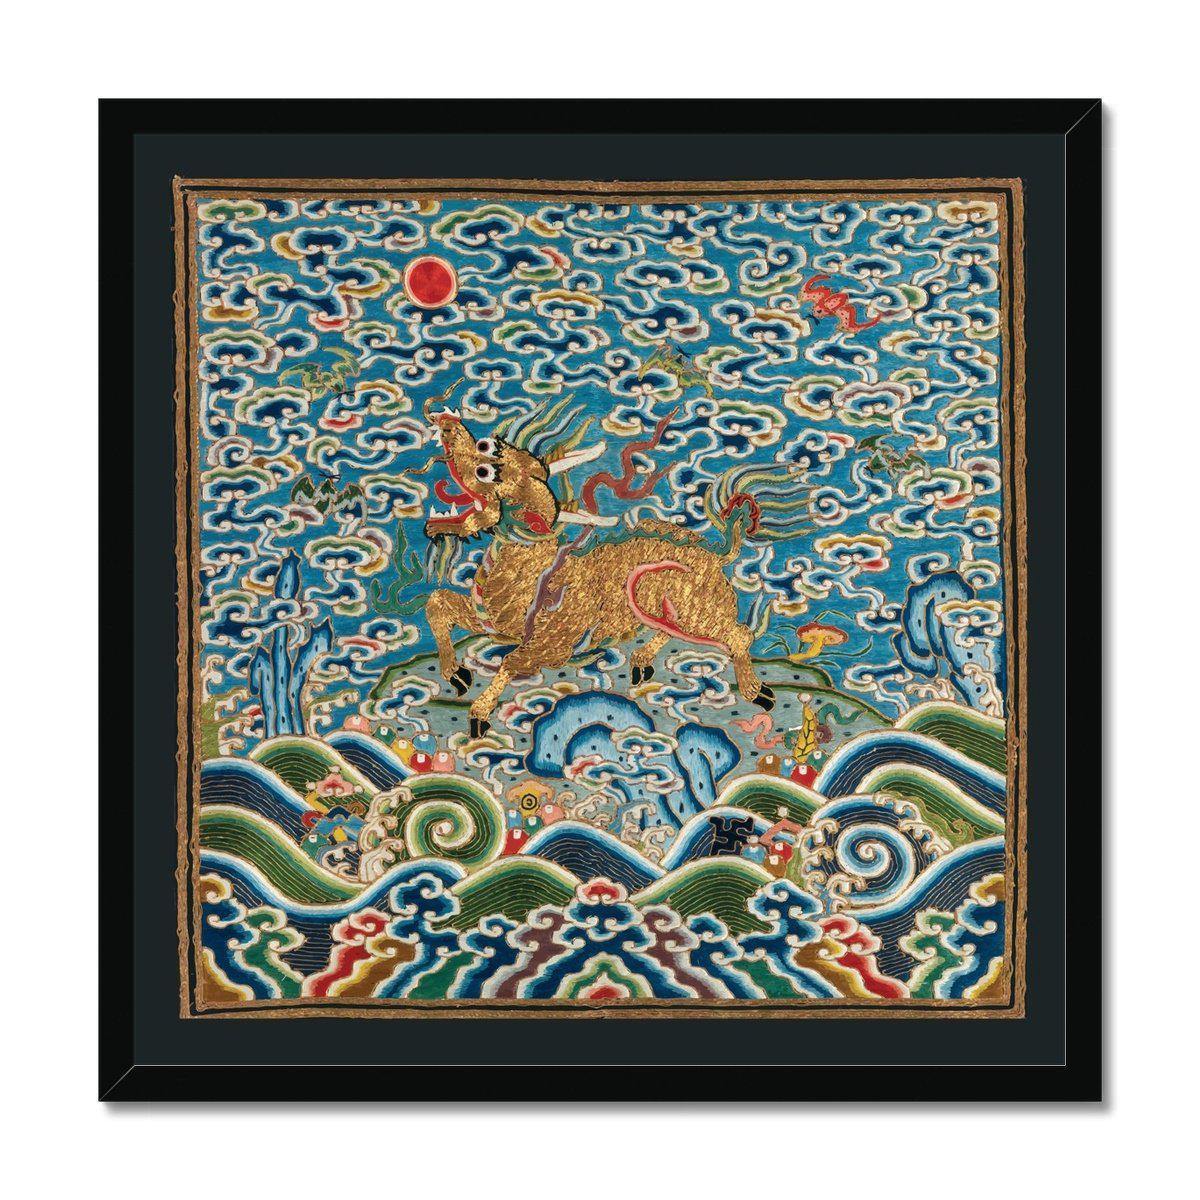 Framed Print 12"x12" / Black Frame Qing Dynasty Silk Embroidery Design | Framed Print